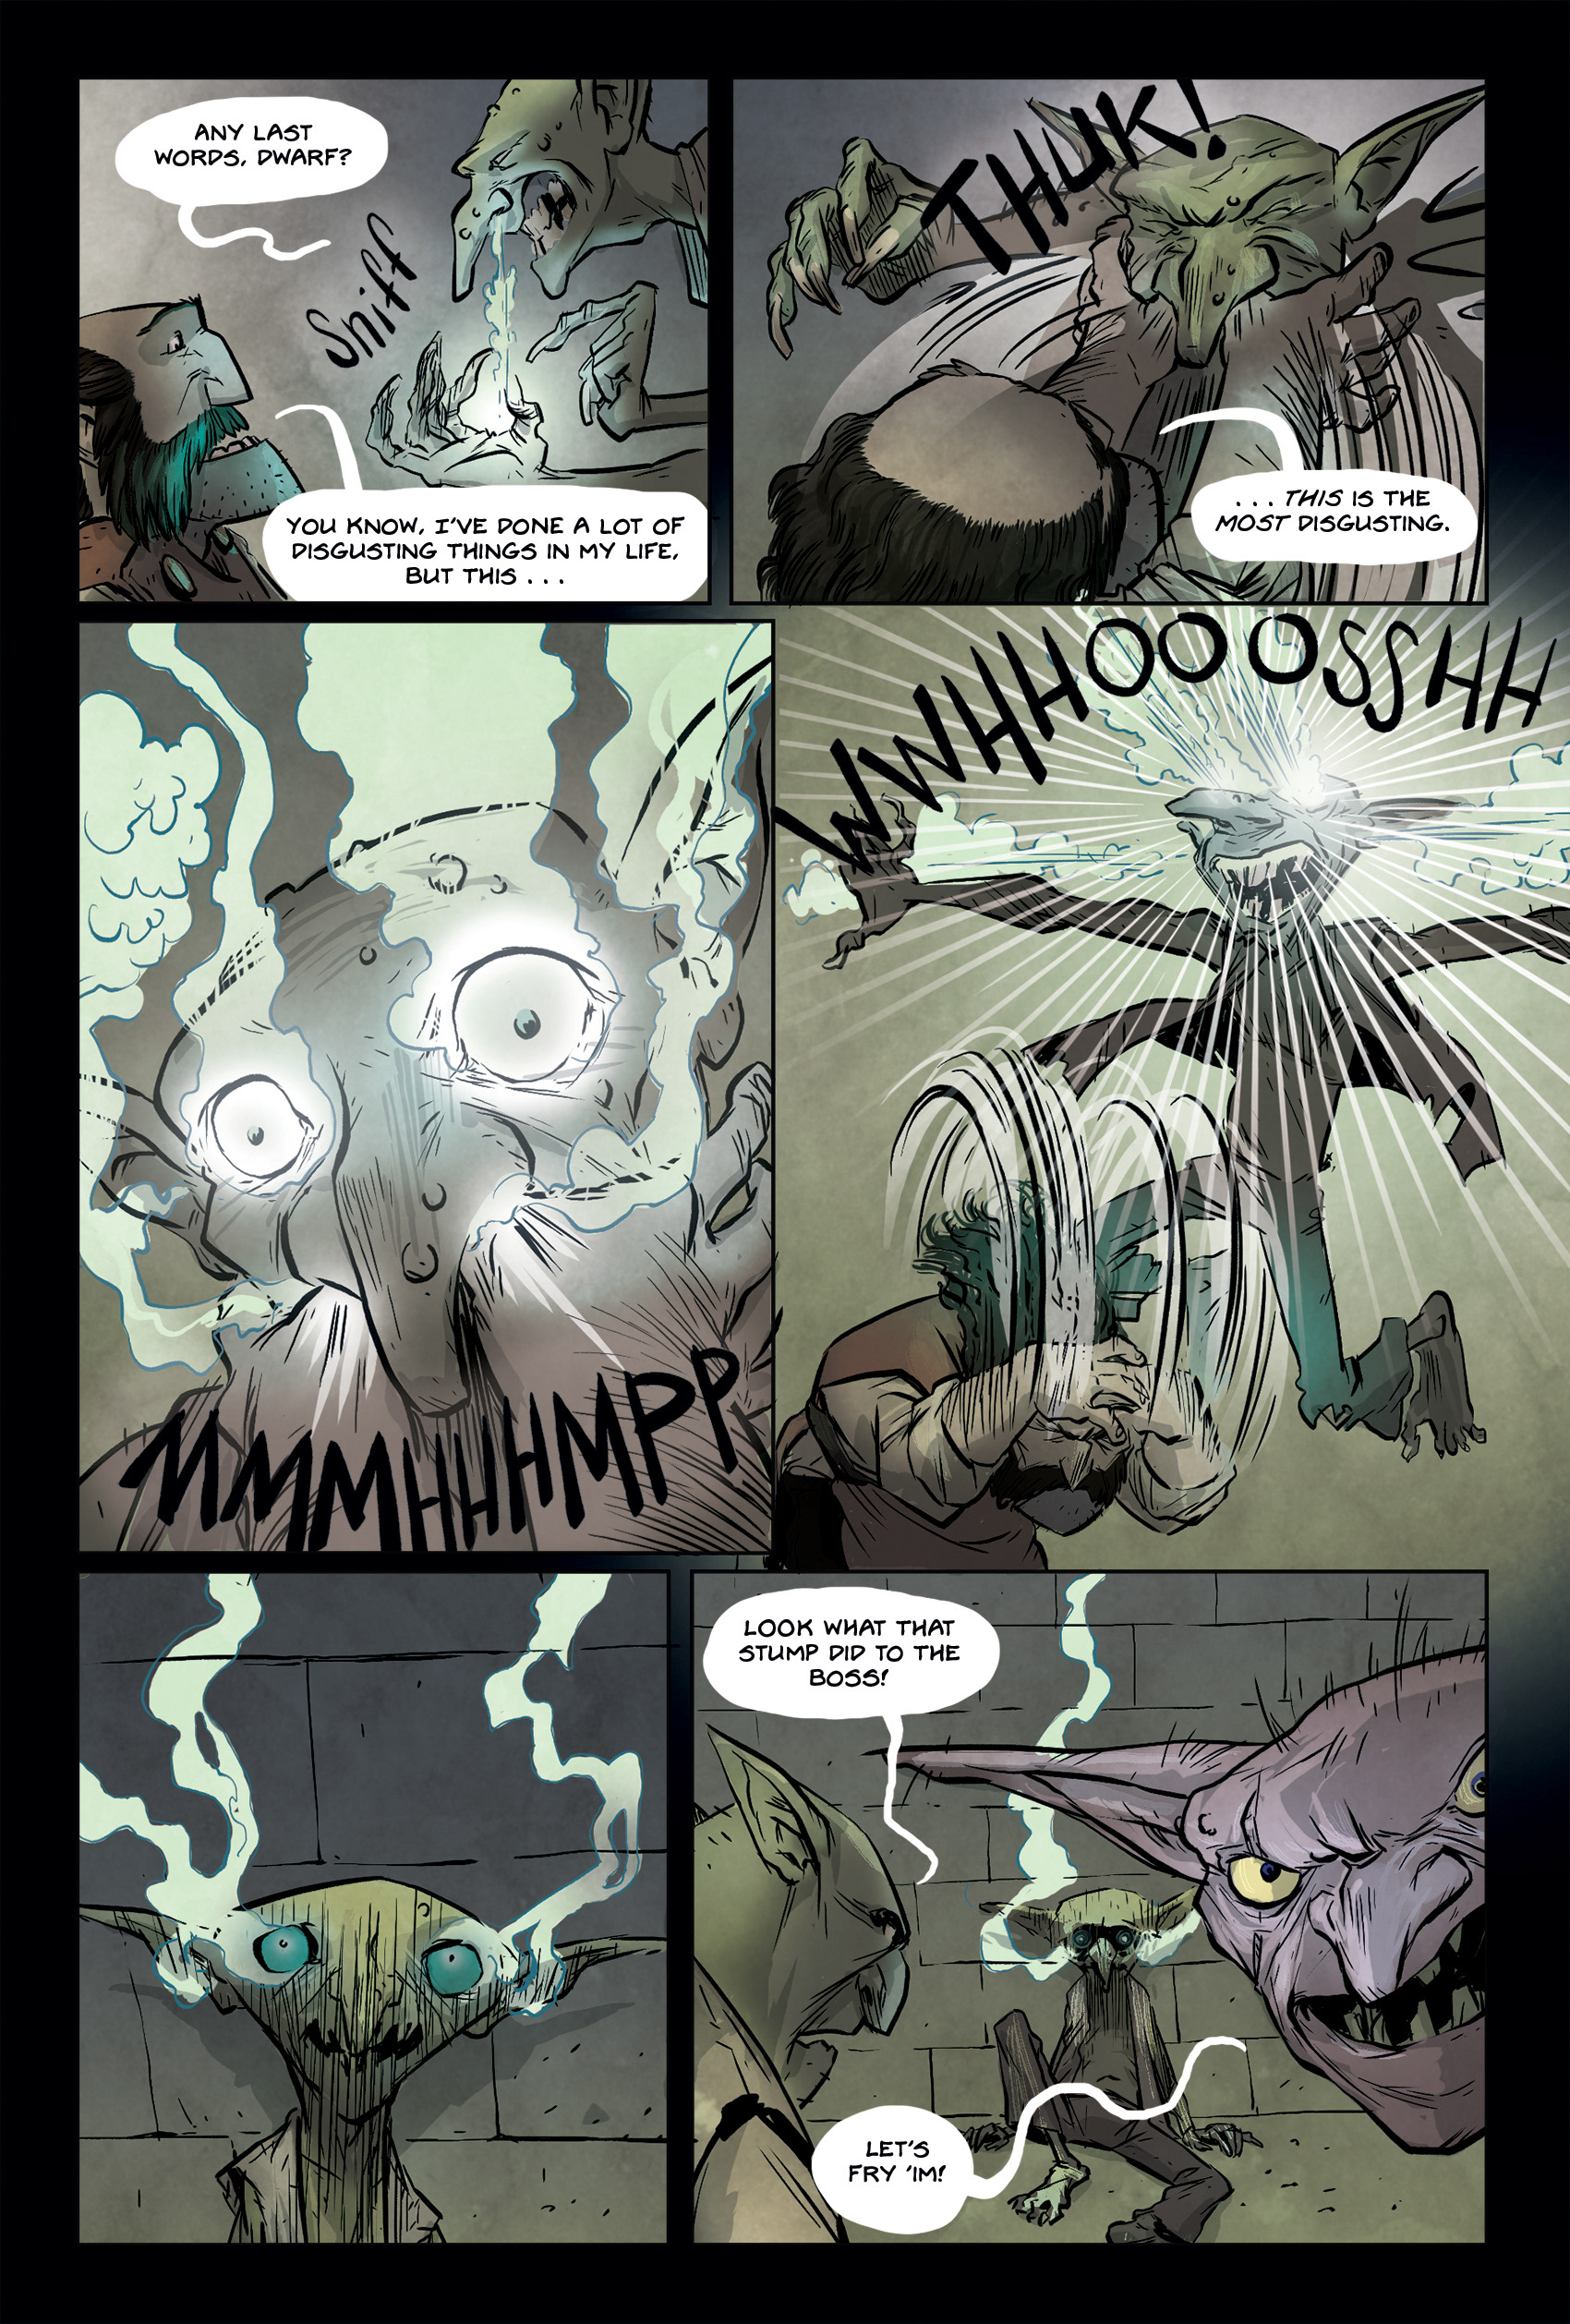 Artemis Fowl: The Graphic Novel Characters - Comic Vine